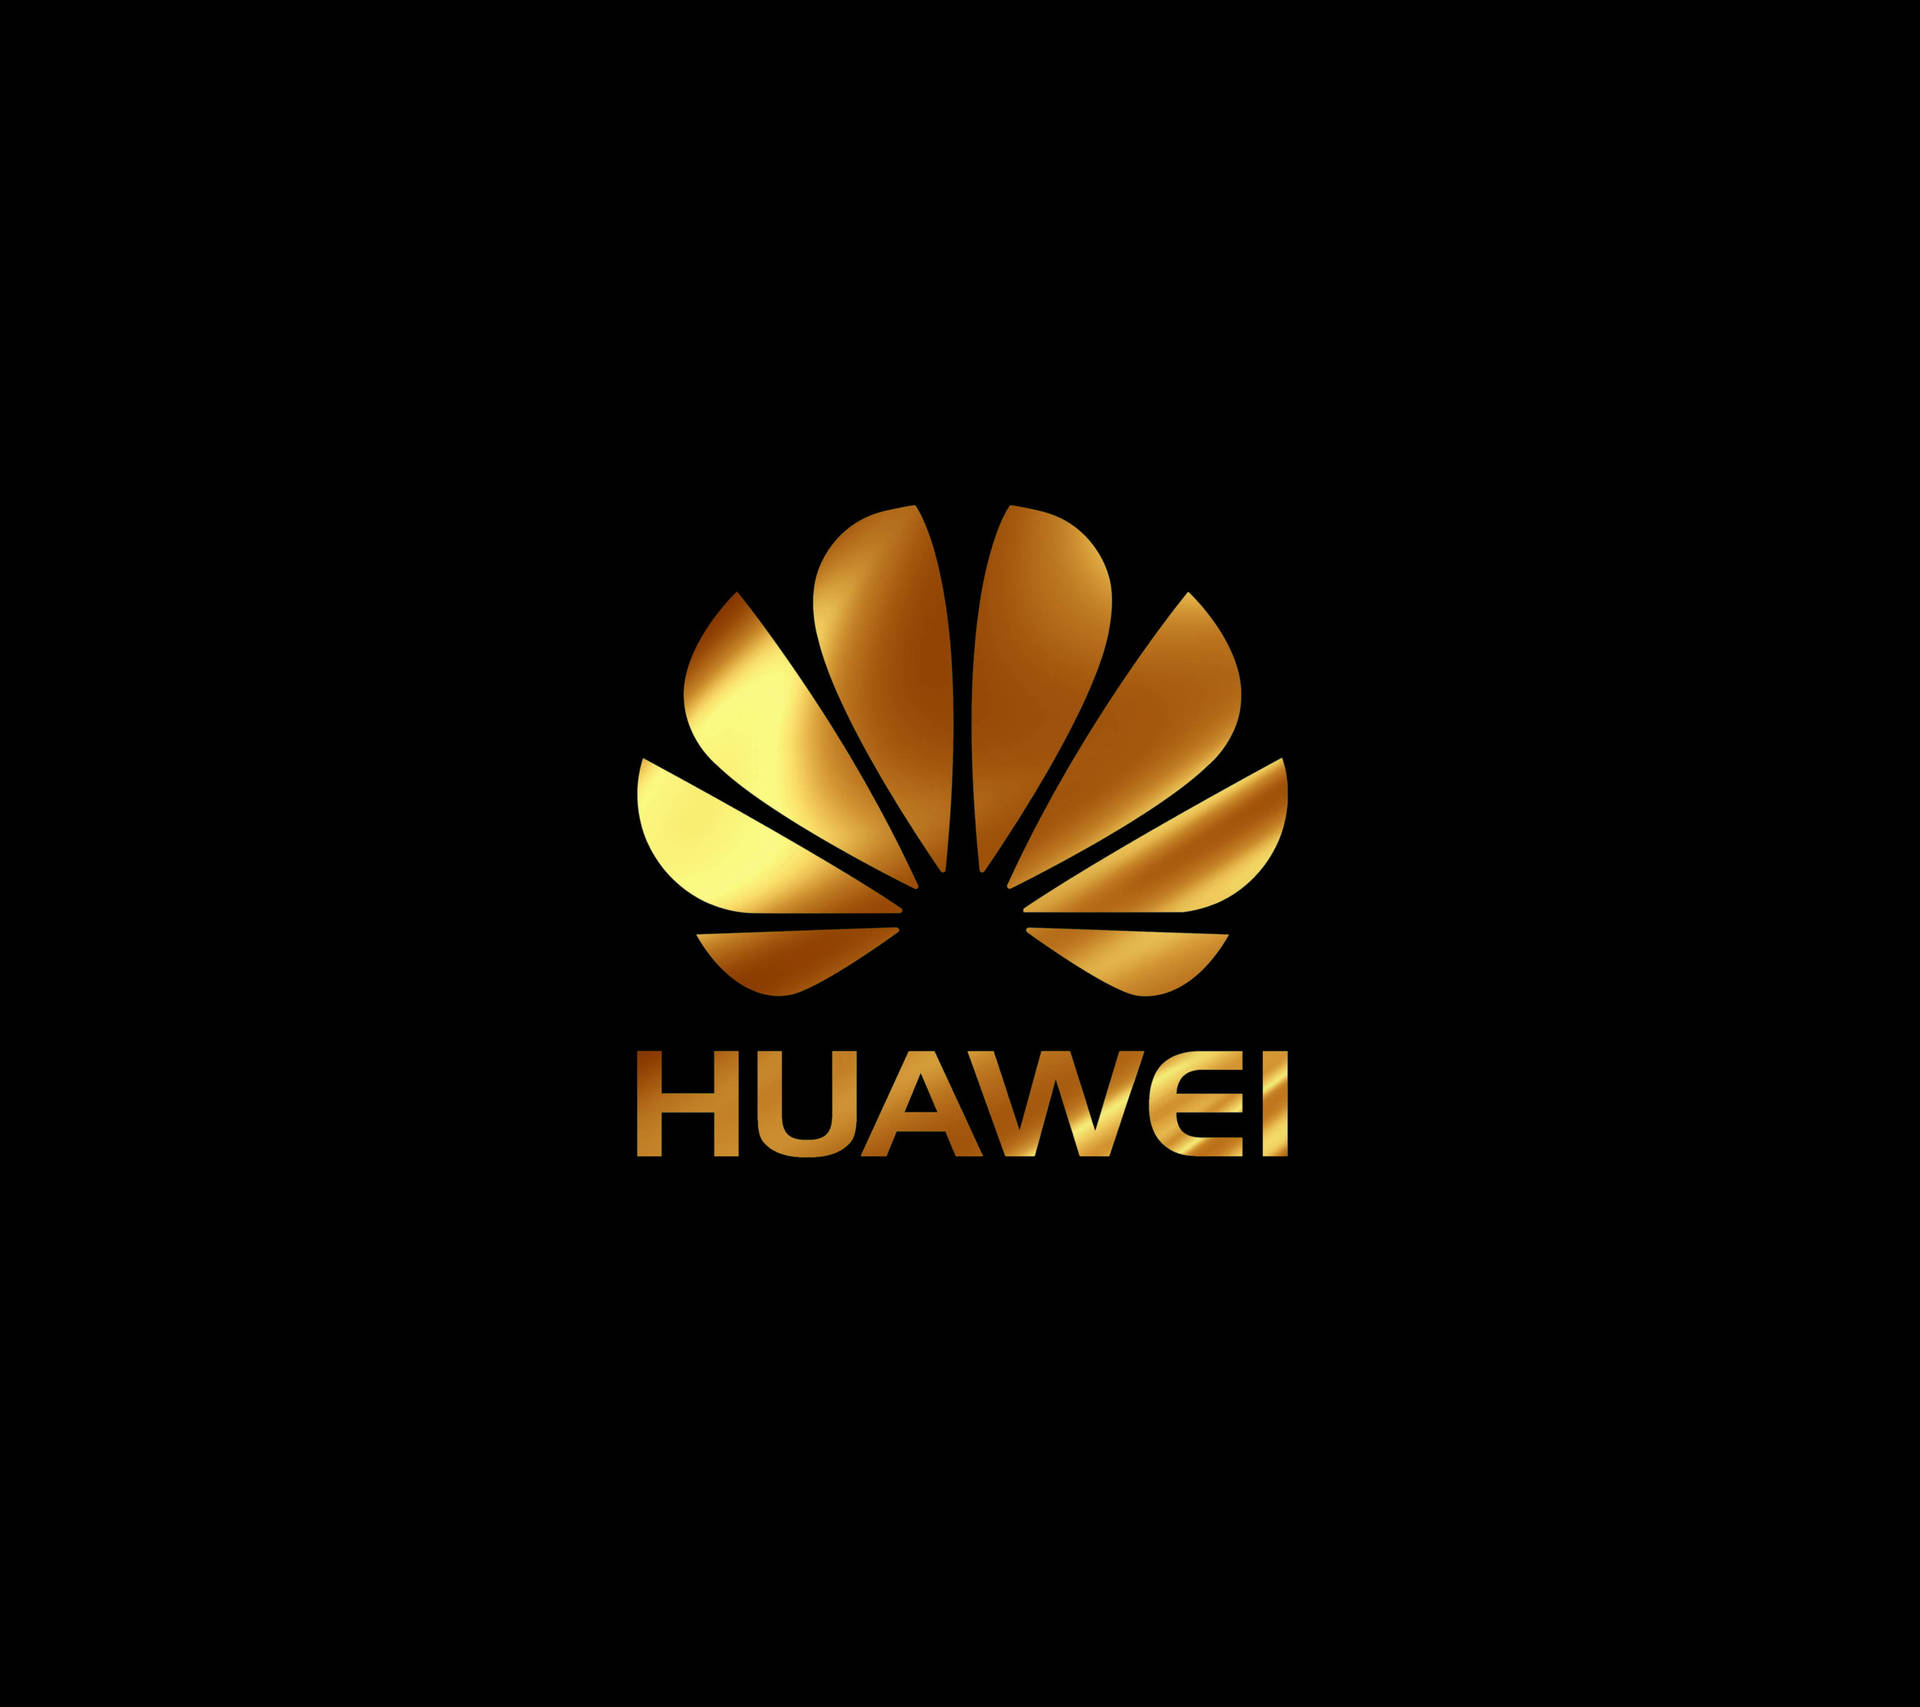 Free Huawei Wallpaper Downloads, [100+] Huawei Wallpapers for FREE |  